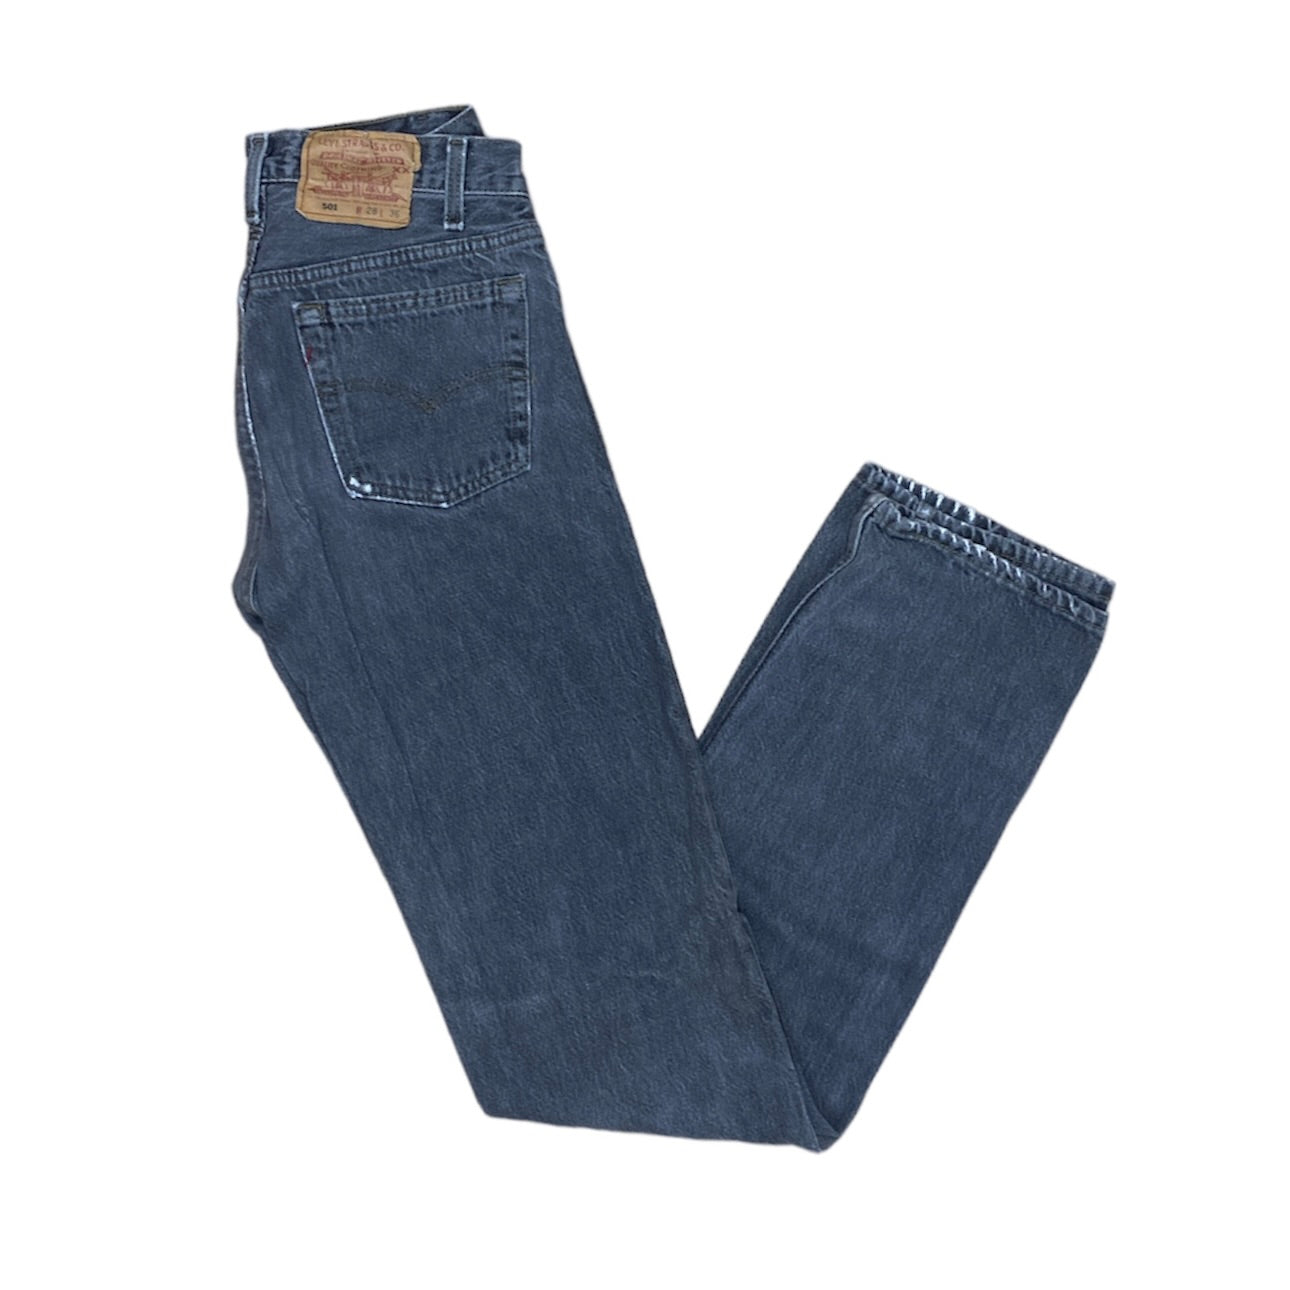 Vintage Levis 501 Vintage Grey Jeans (W28/L36)